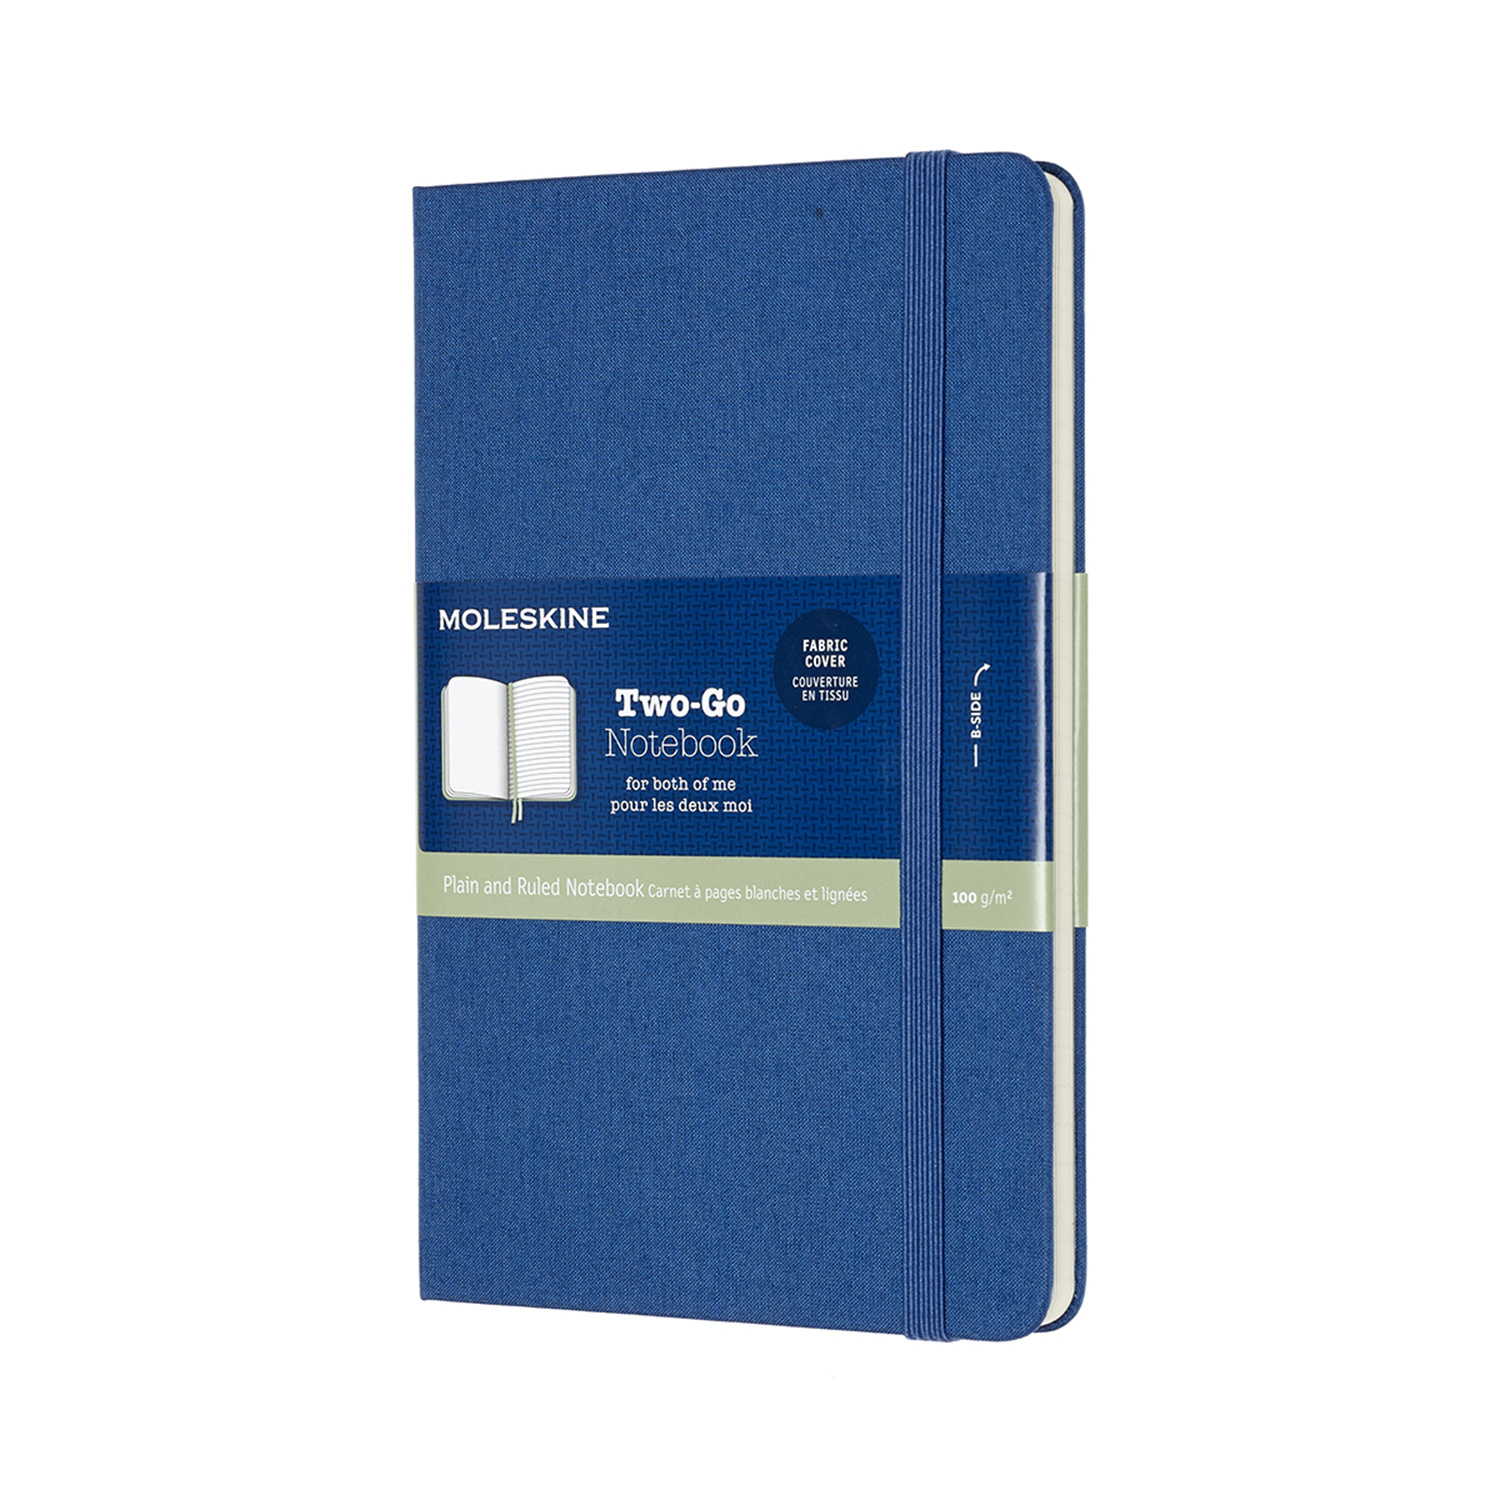 Two-go notebook black medium plain and ruled lapis blue